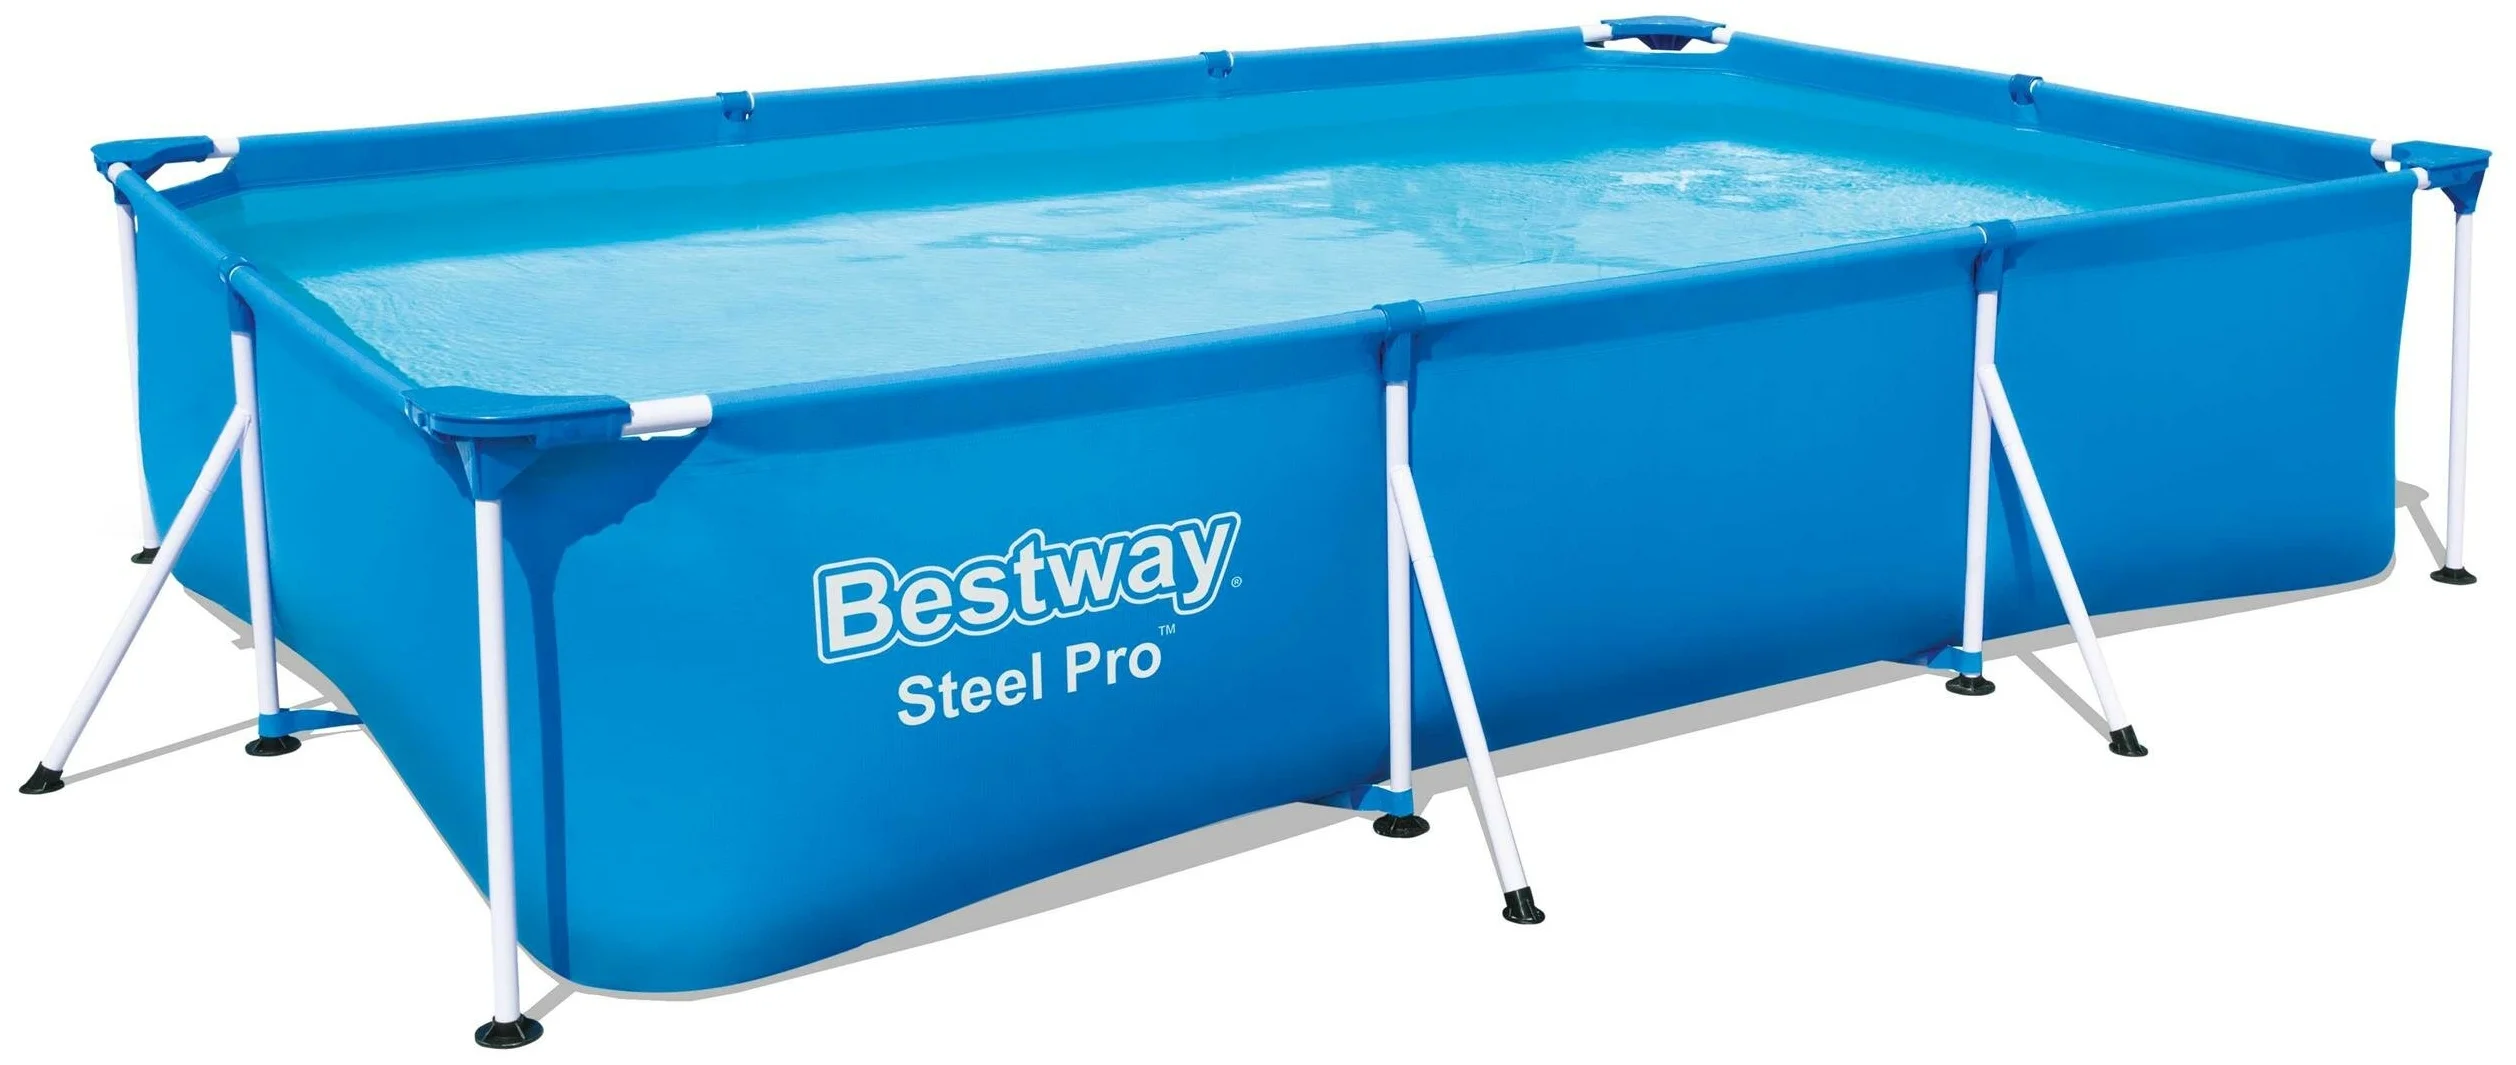 Bestway Steel Pro 56404/56043, 300х66 см - конструкция: каркасный